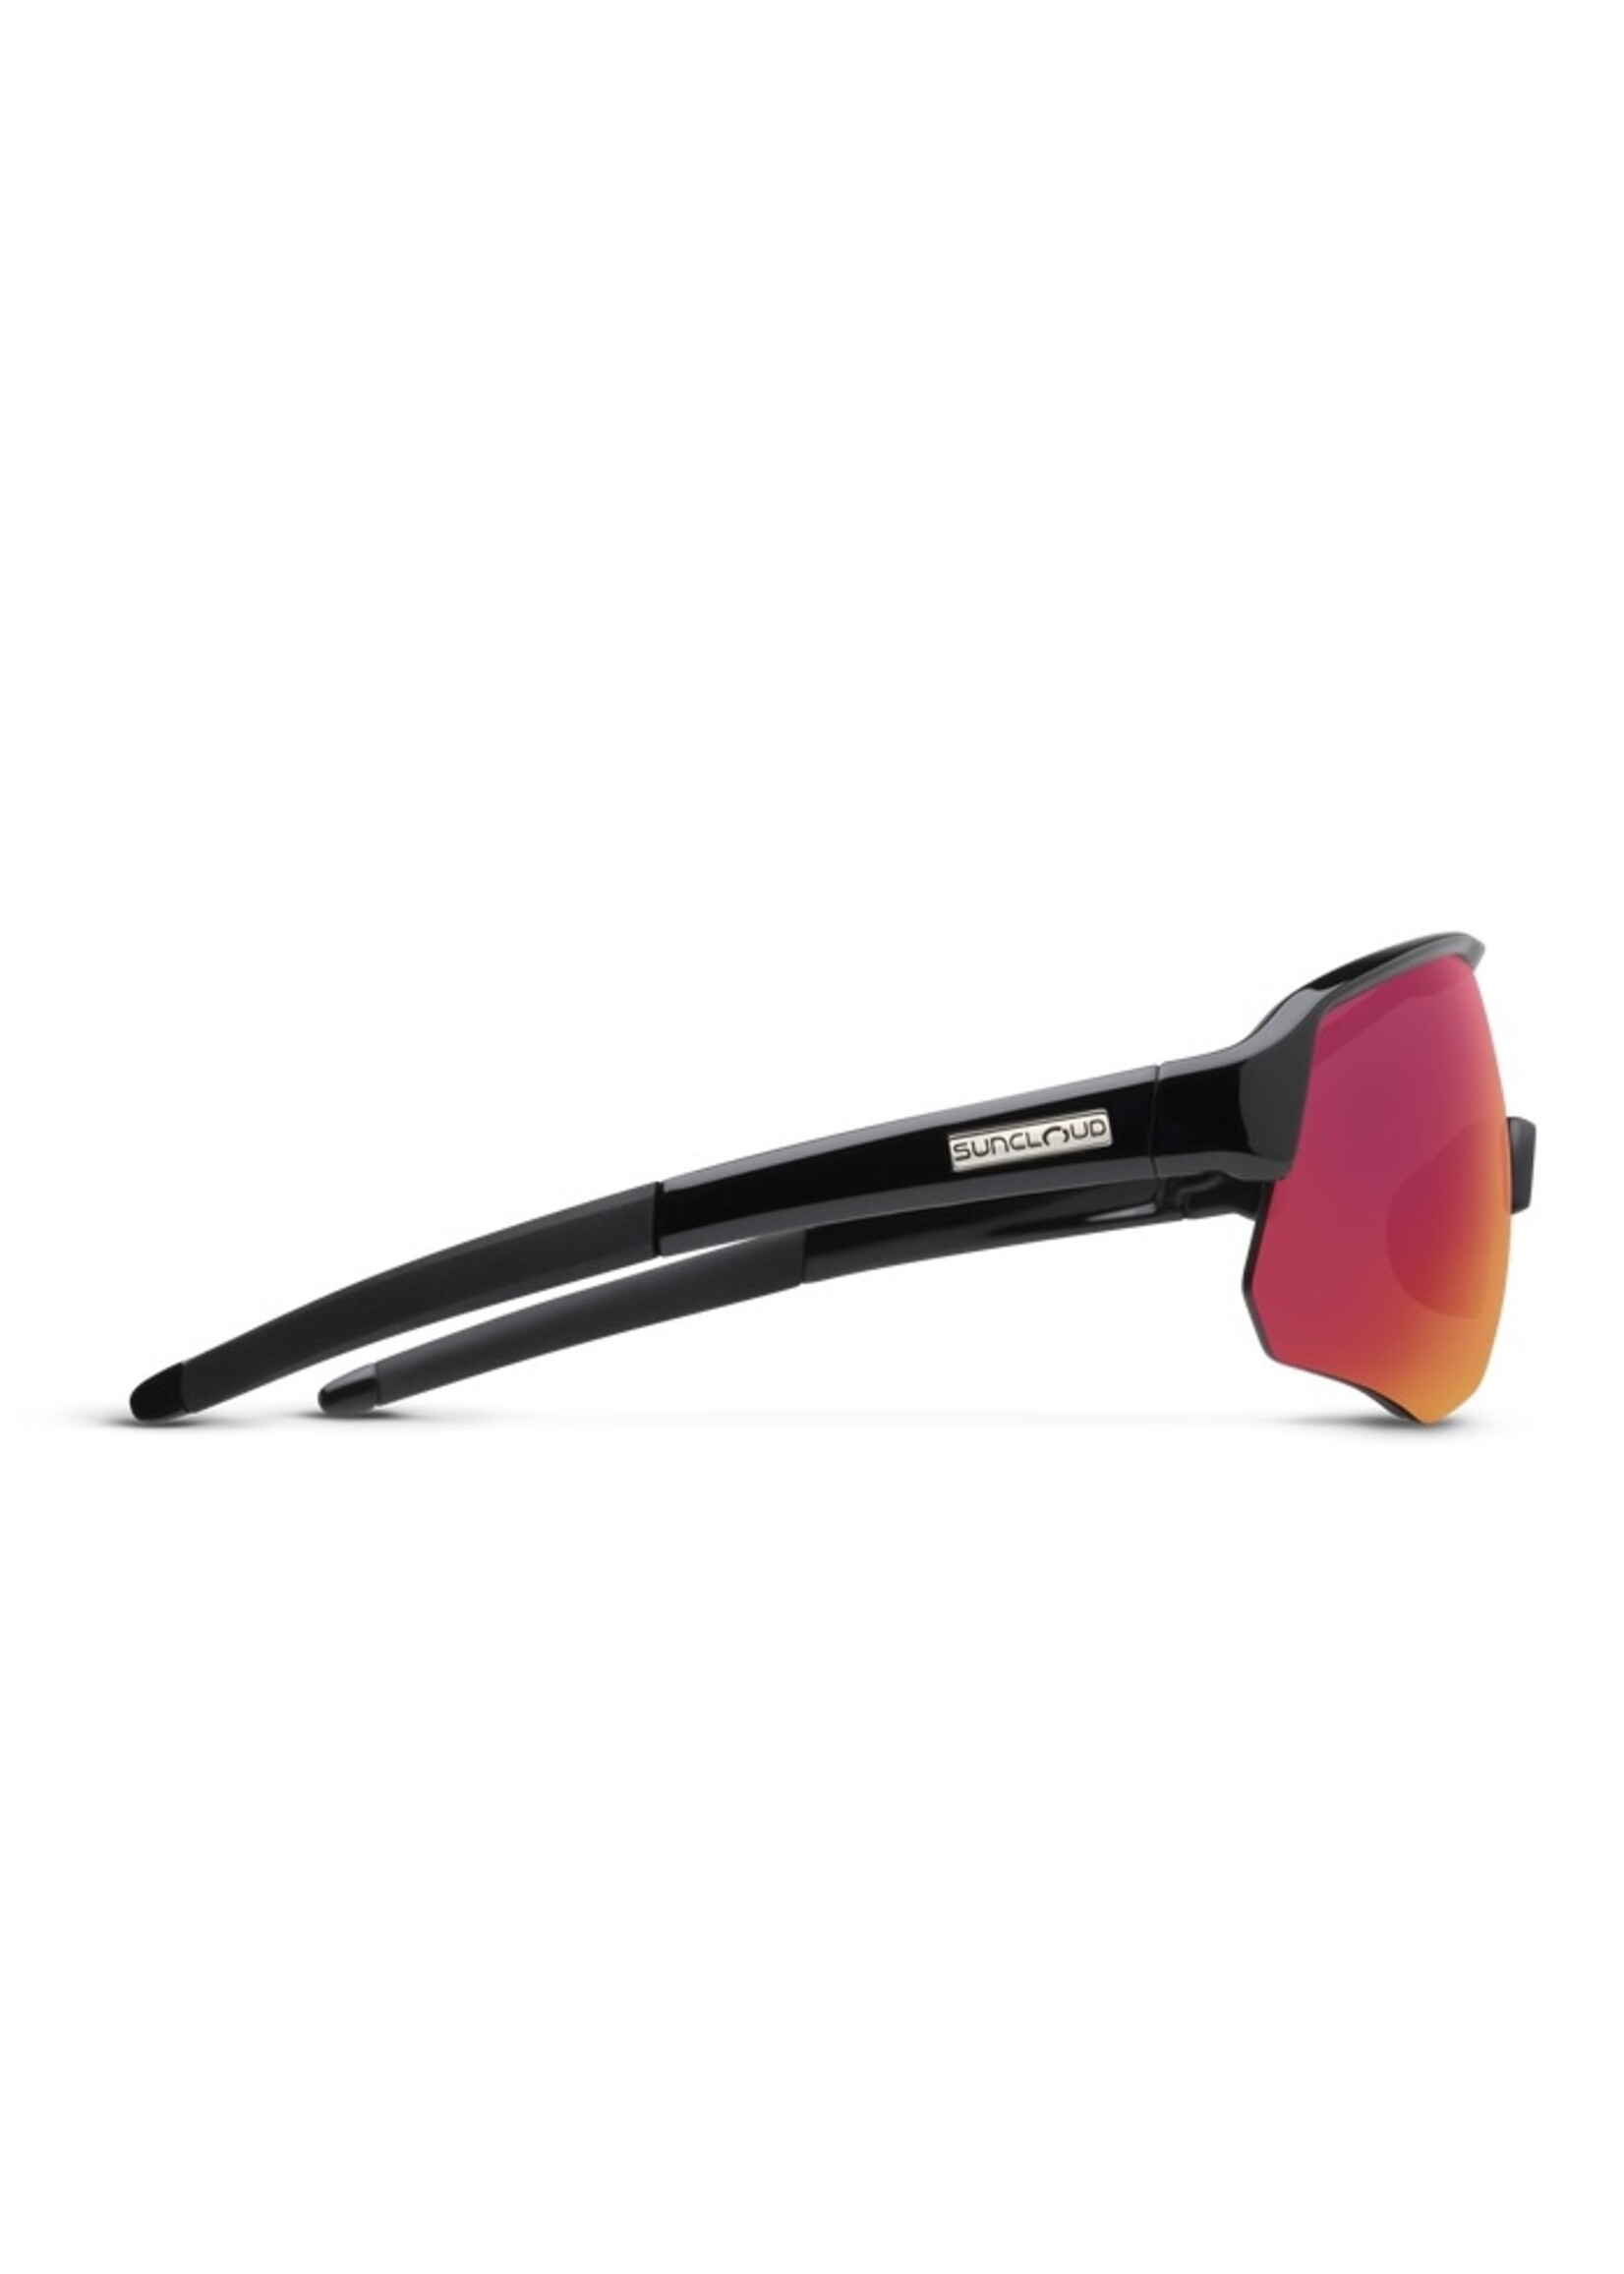 Suncloud Cadence Polarized Sunglasses